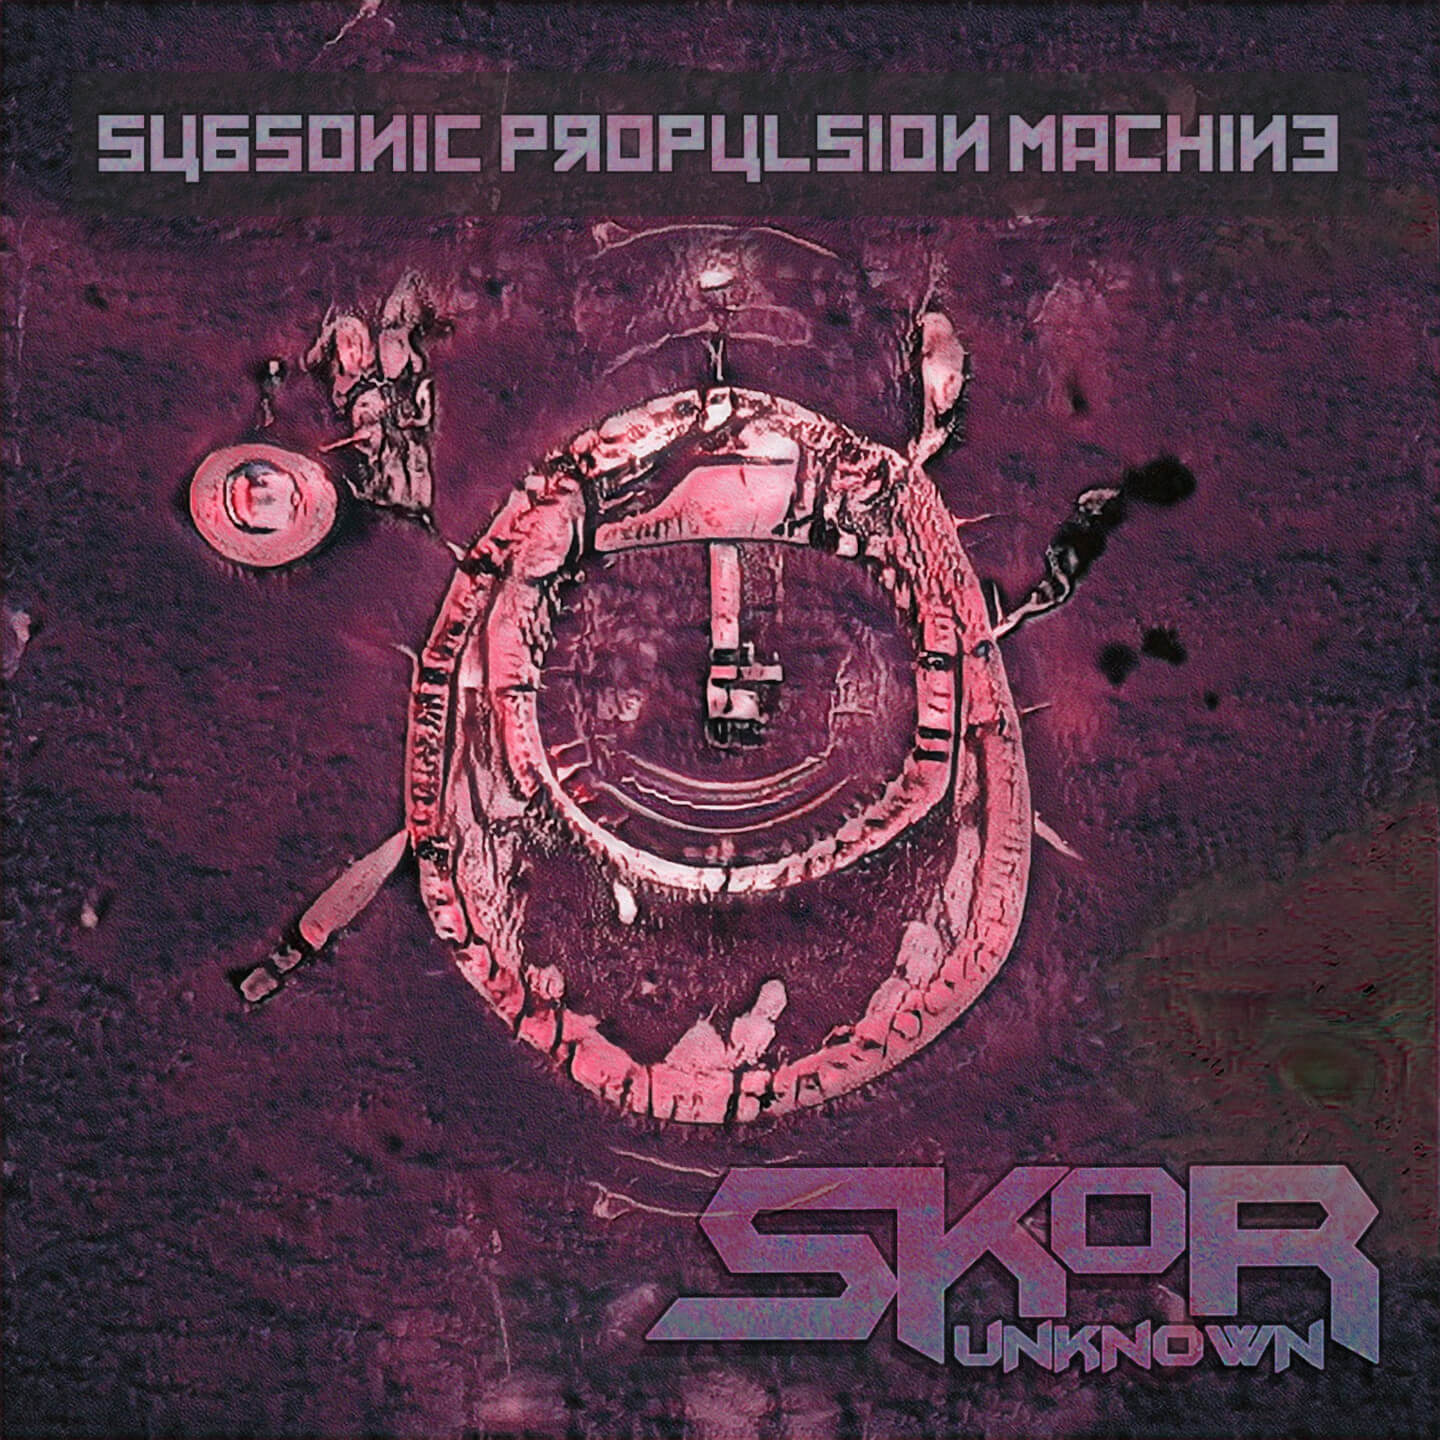 subsonic-propulsion-machine-cover-art